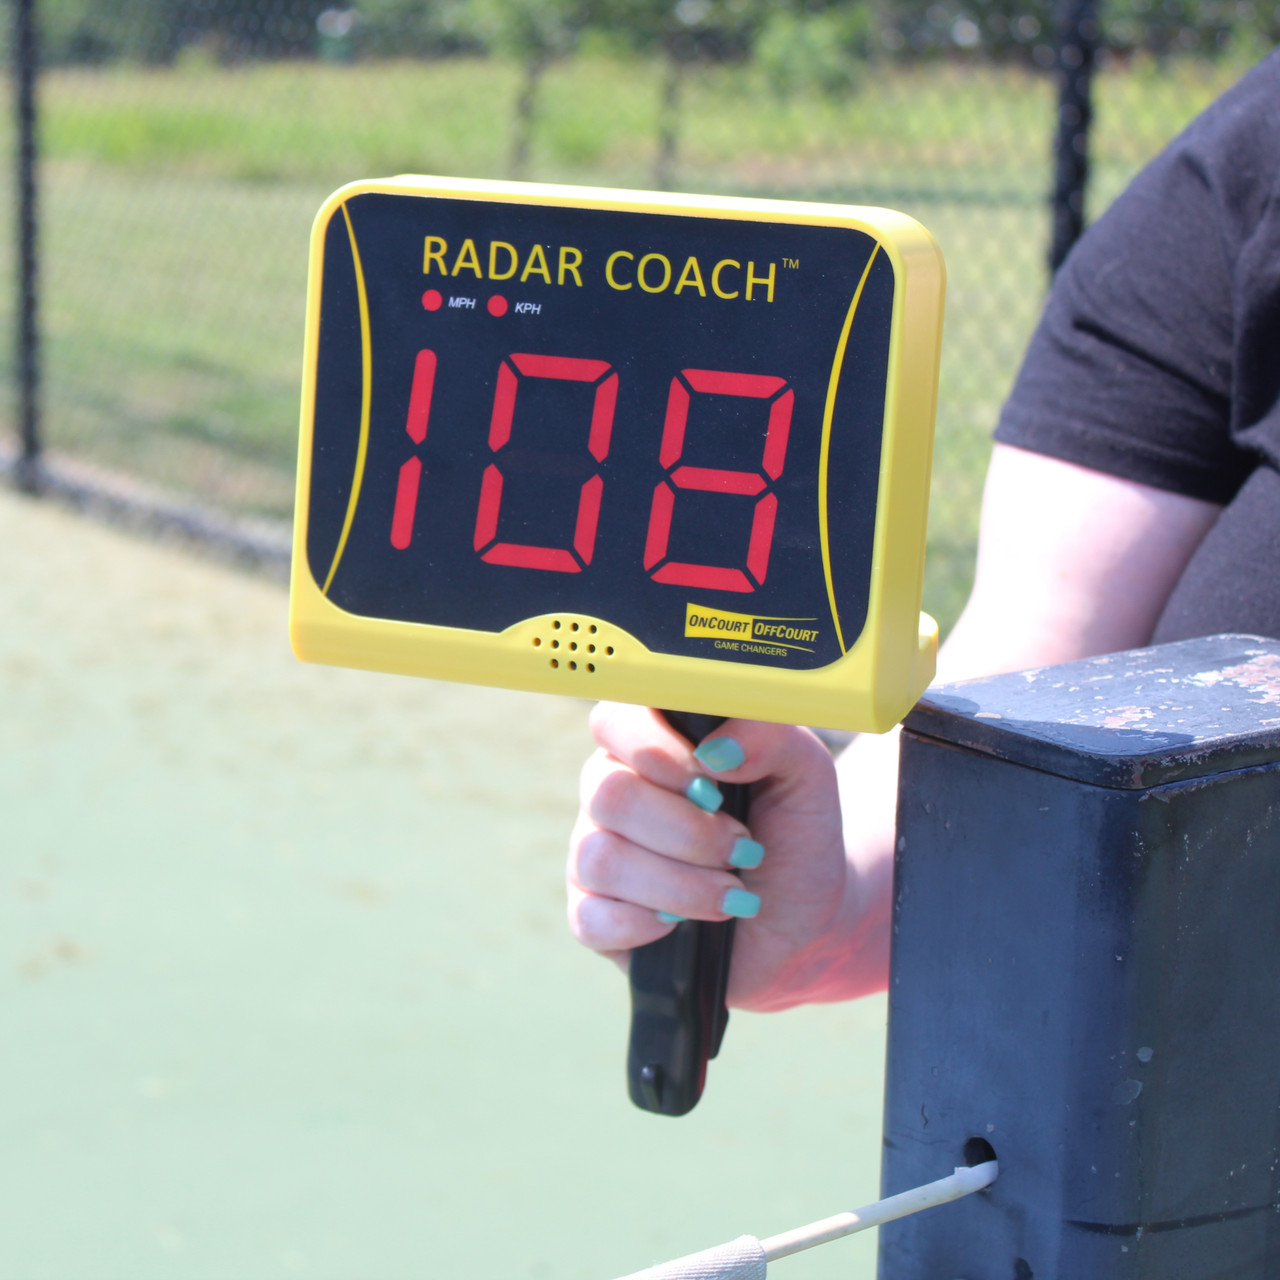 Radar Coach - Sports Radar Gun